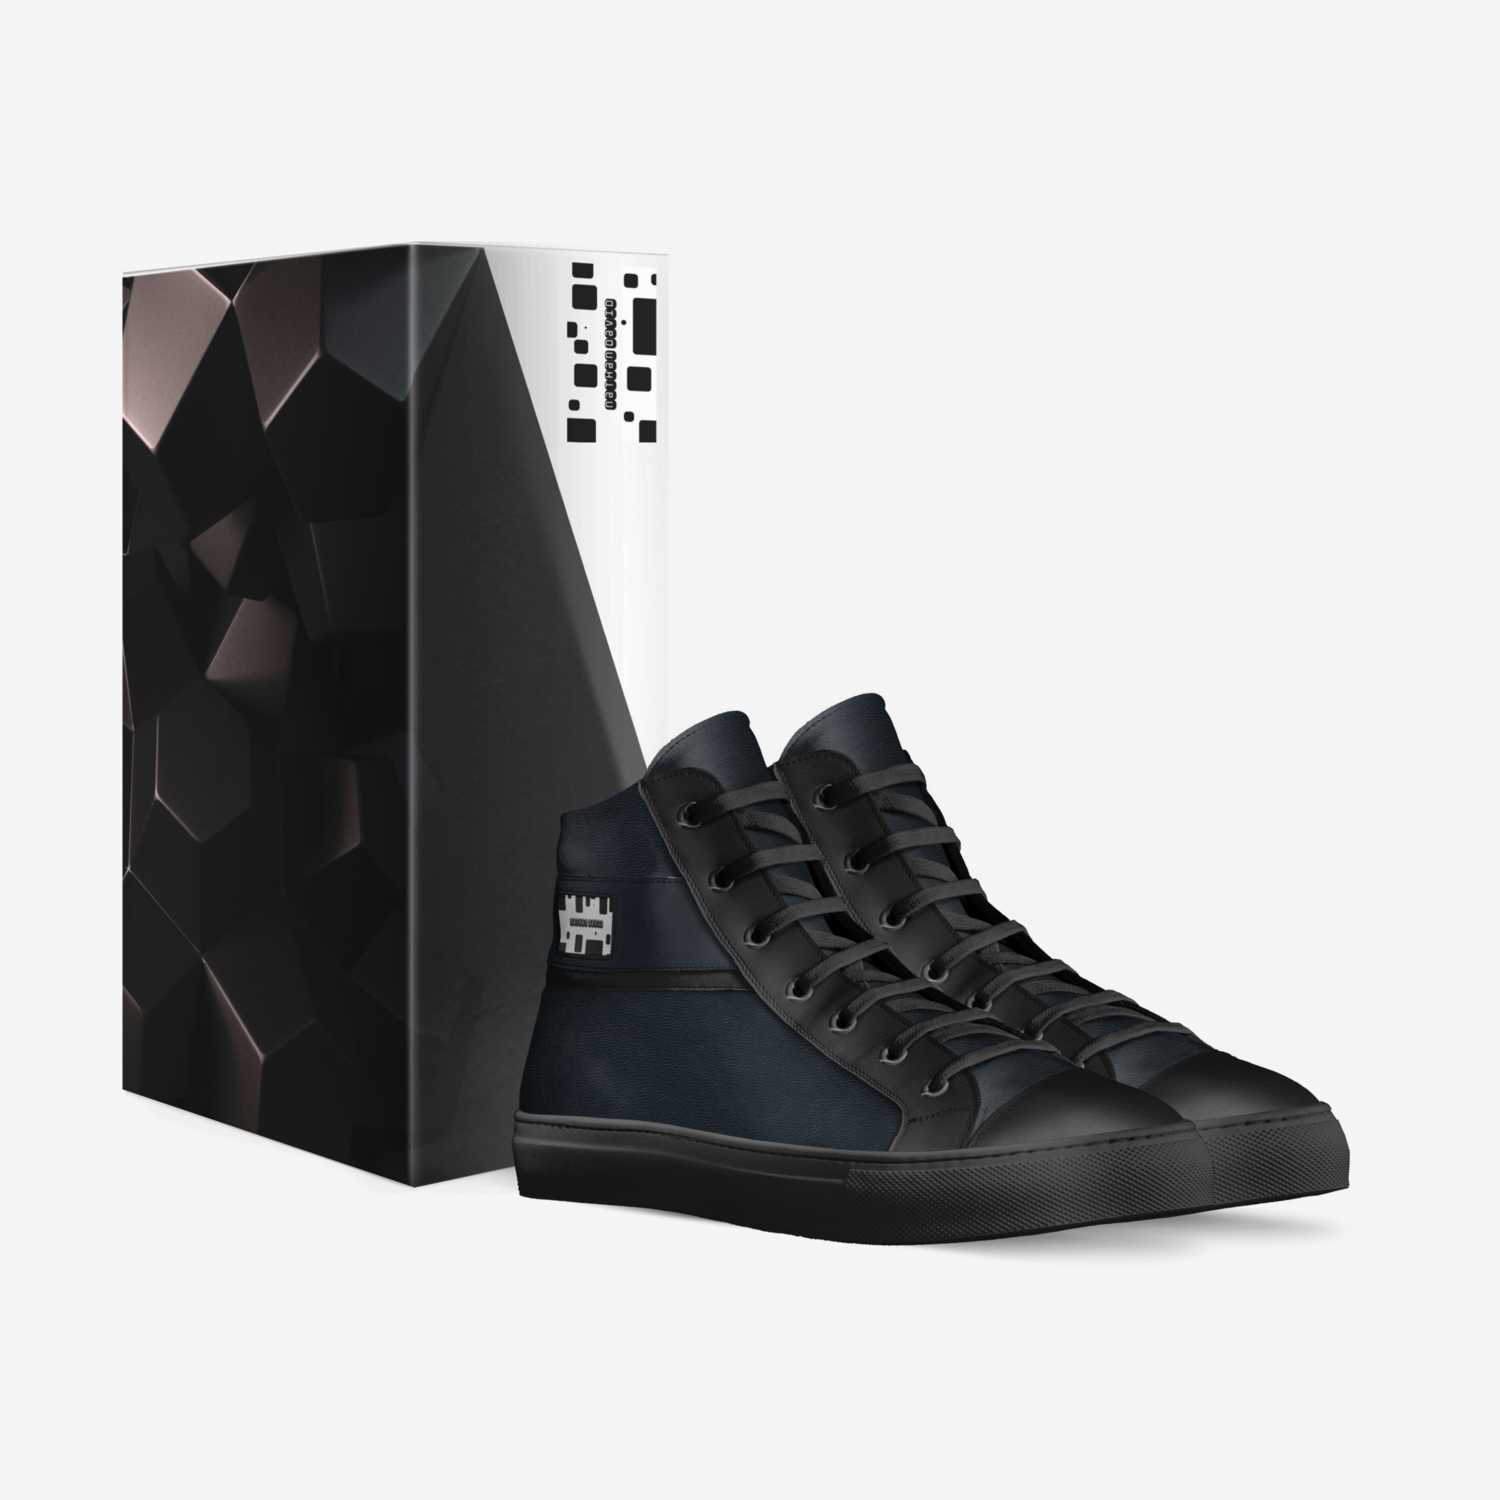 Nathan David custom made in Italy shoes by Nathan Roman | Box view